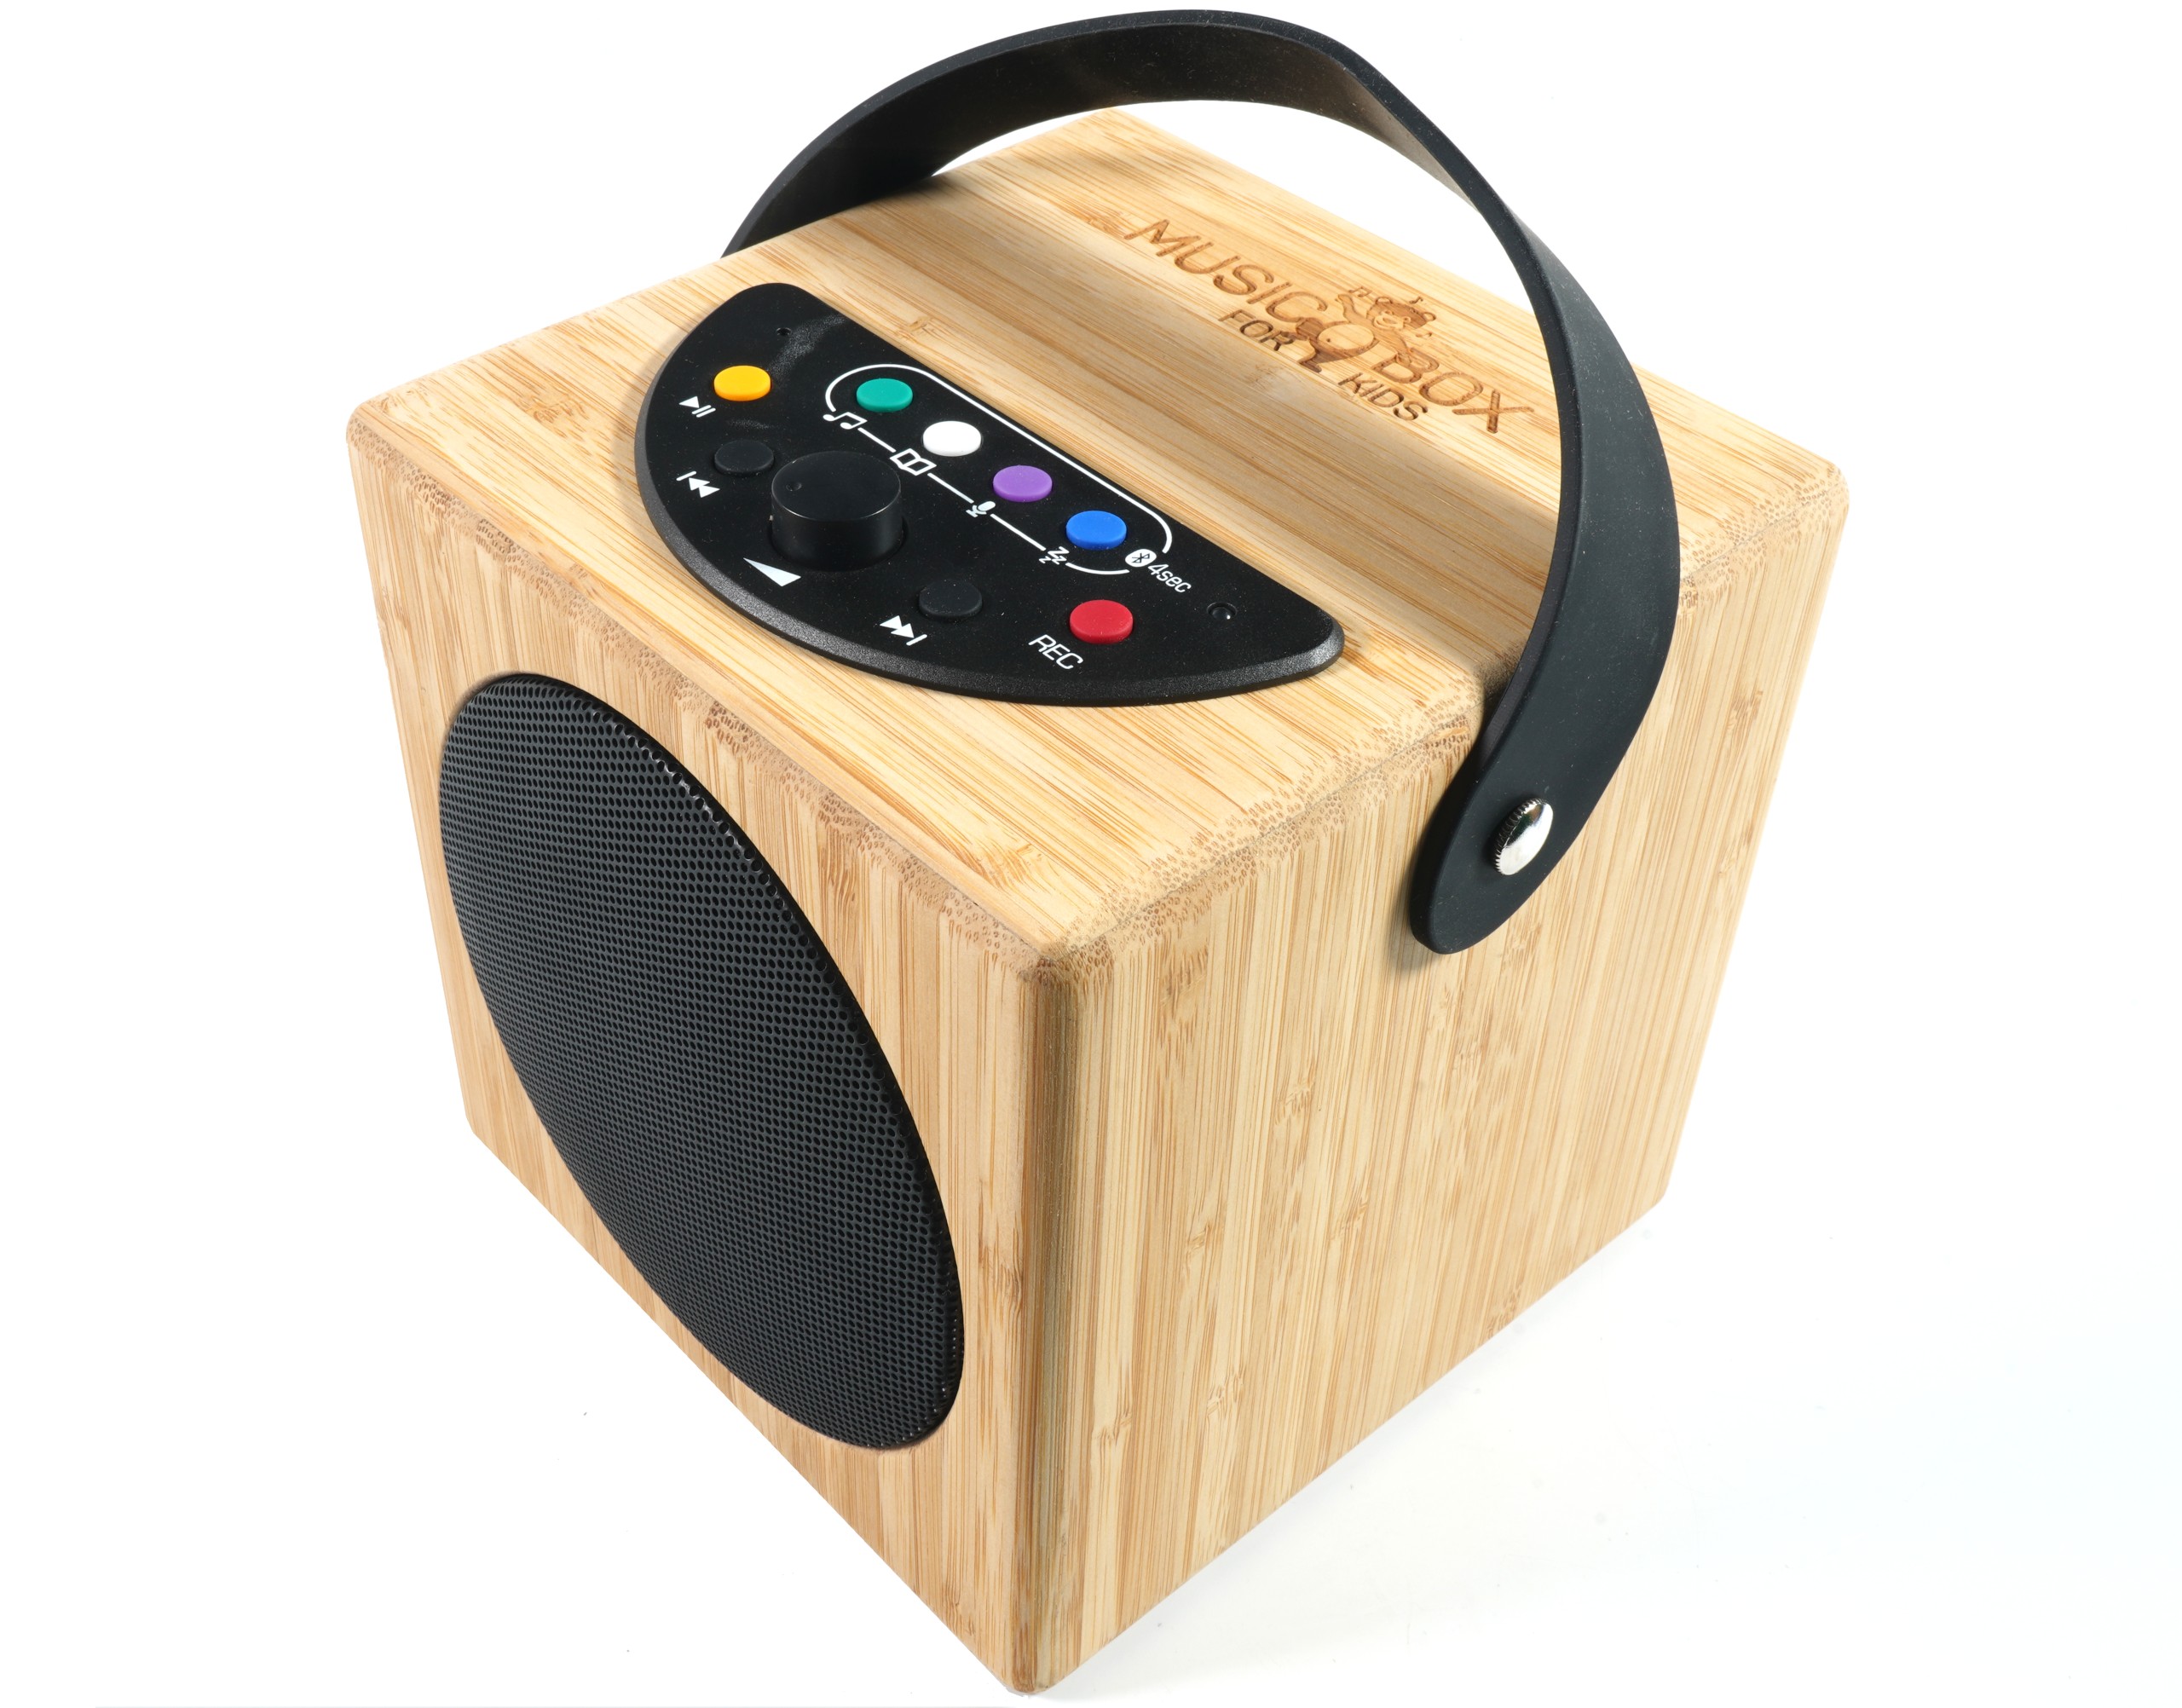 KidzAudio Music Box for Kids Enceinte Bluetooth portable pour